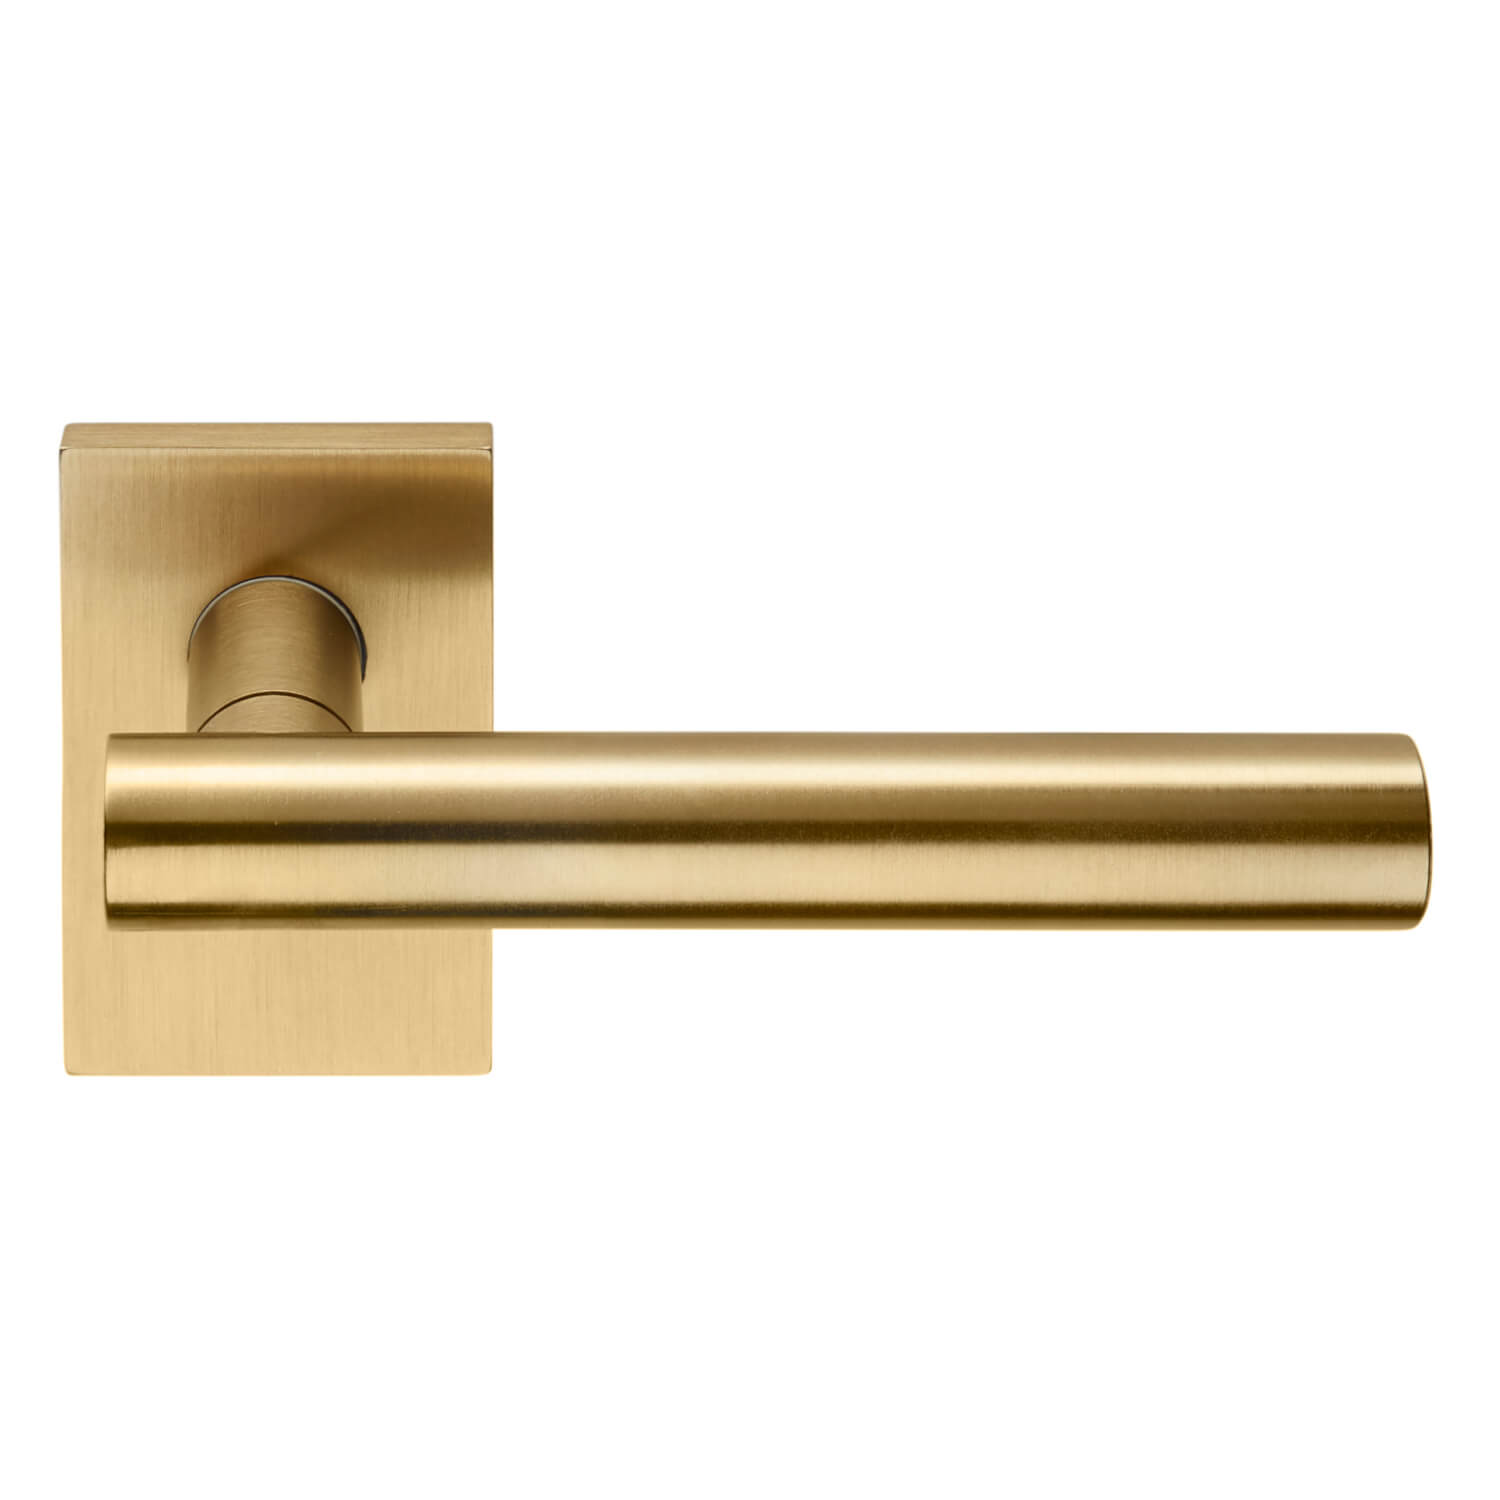 DND Door Handle - Antique satin gold - Design by 967arch - Model